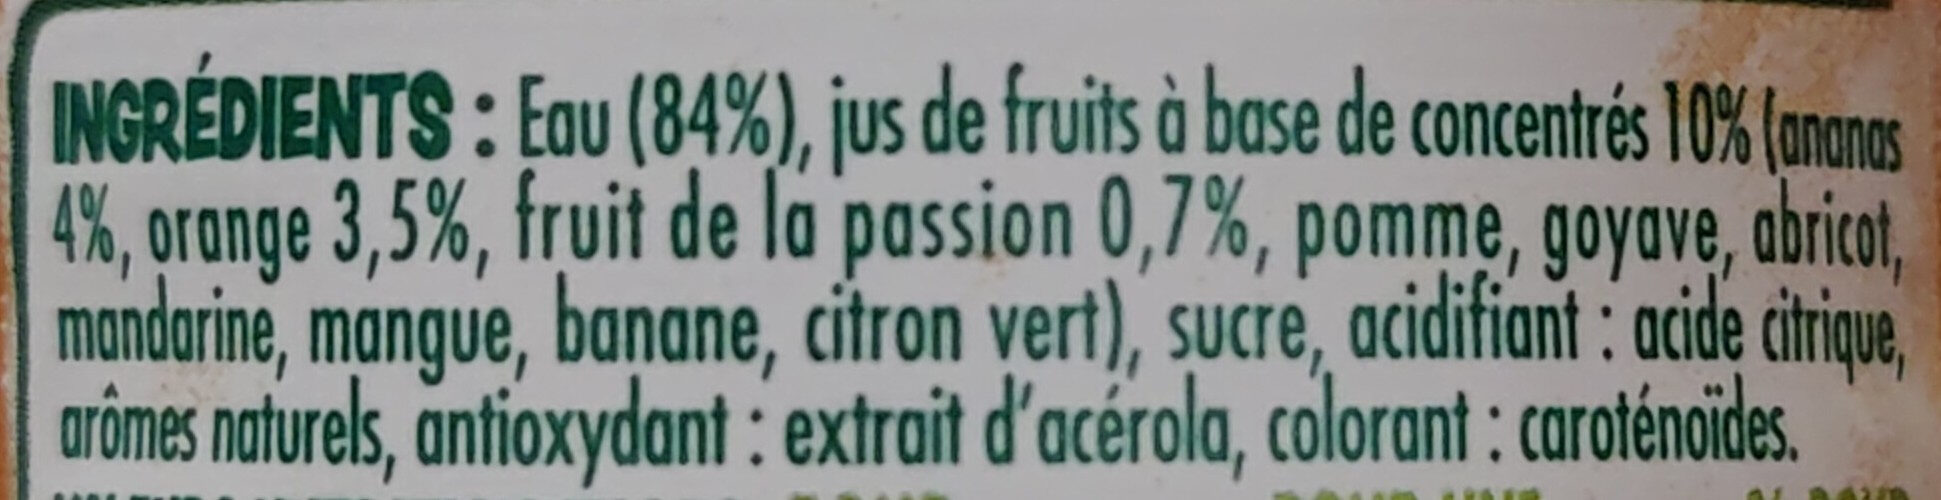 Fruit shoot tropical - Ingredients - fr